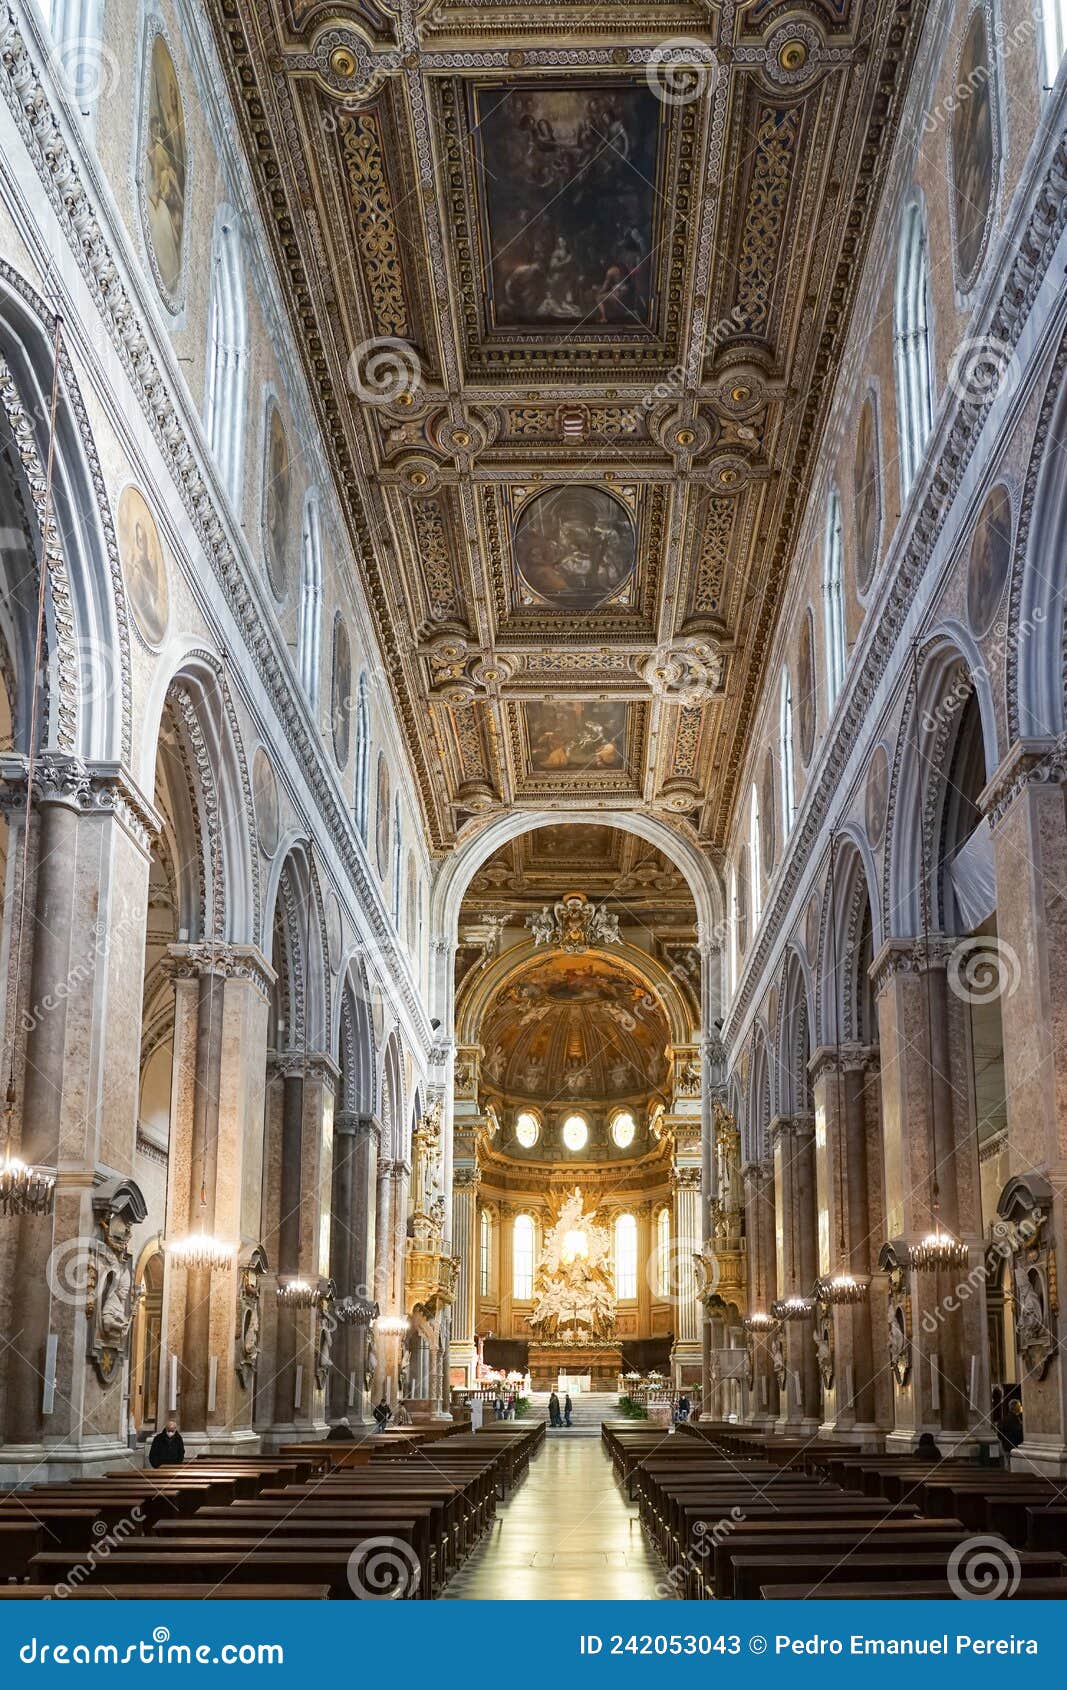 interior of the basilica of santa maria del principio in naples, italy.